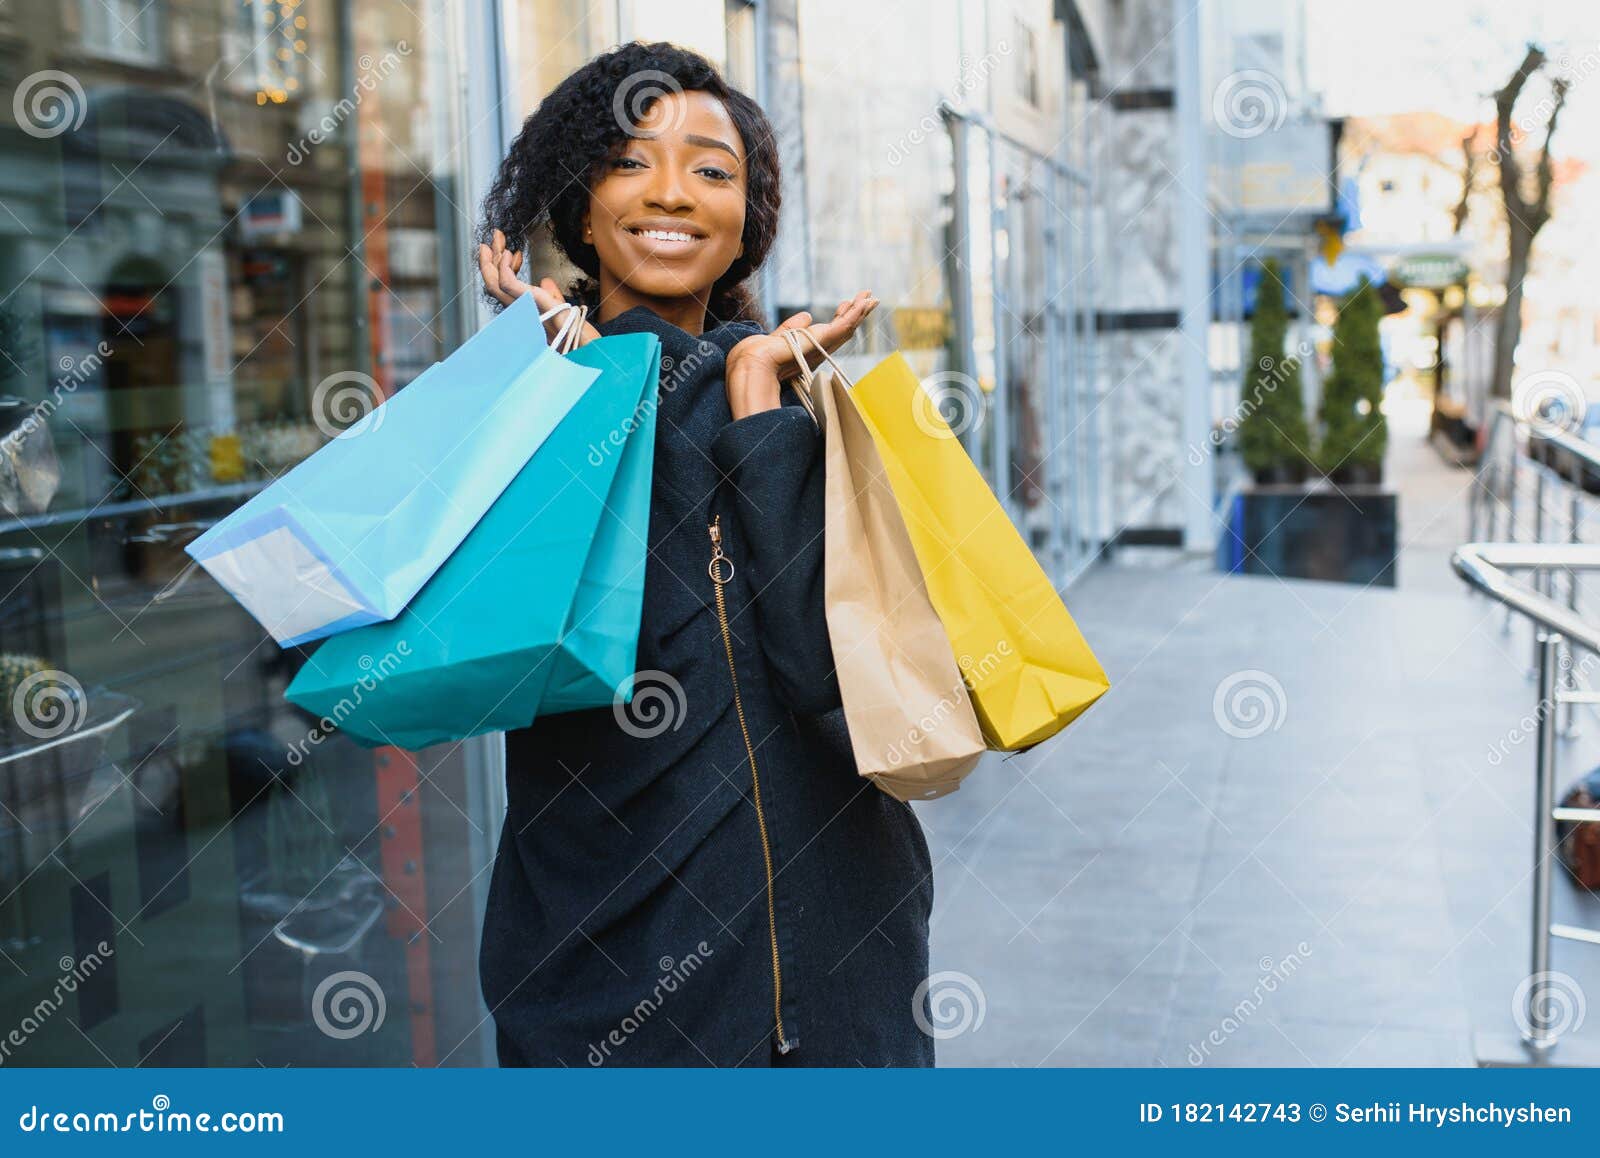 African American Woman Shopping. Seasonal Discounts Stock Image - Image ...